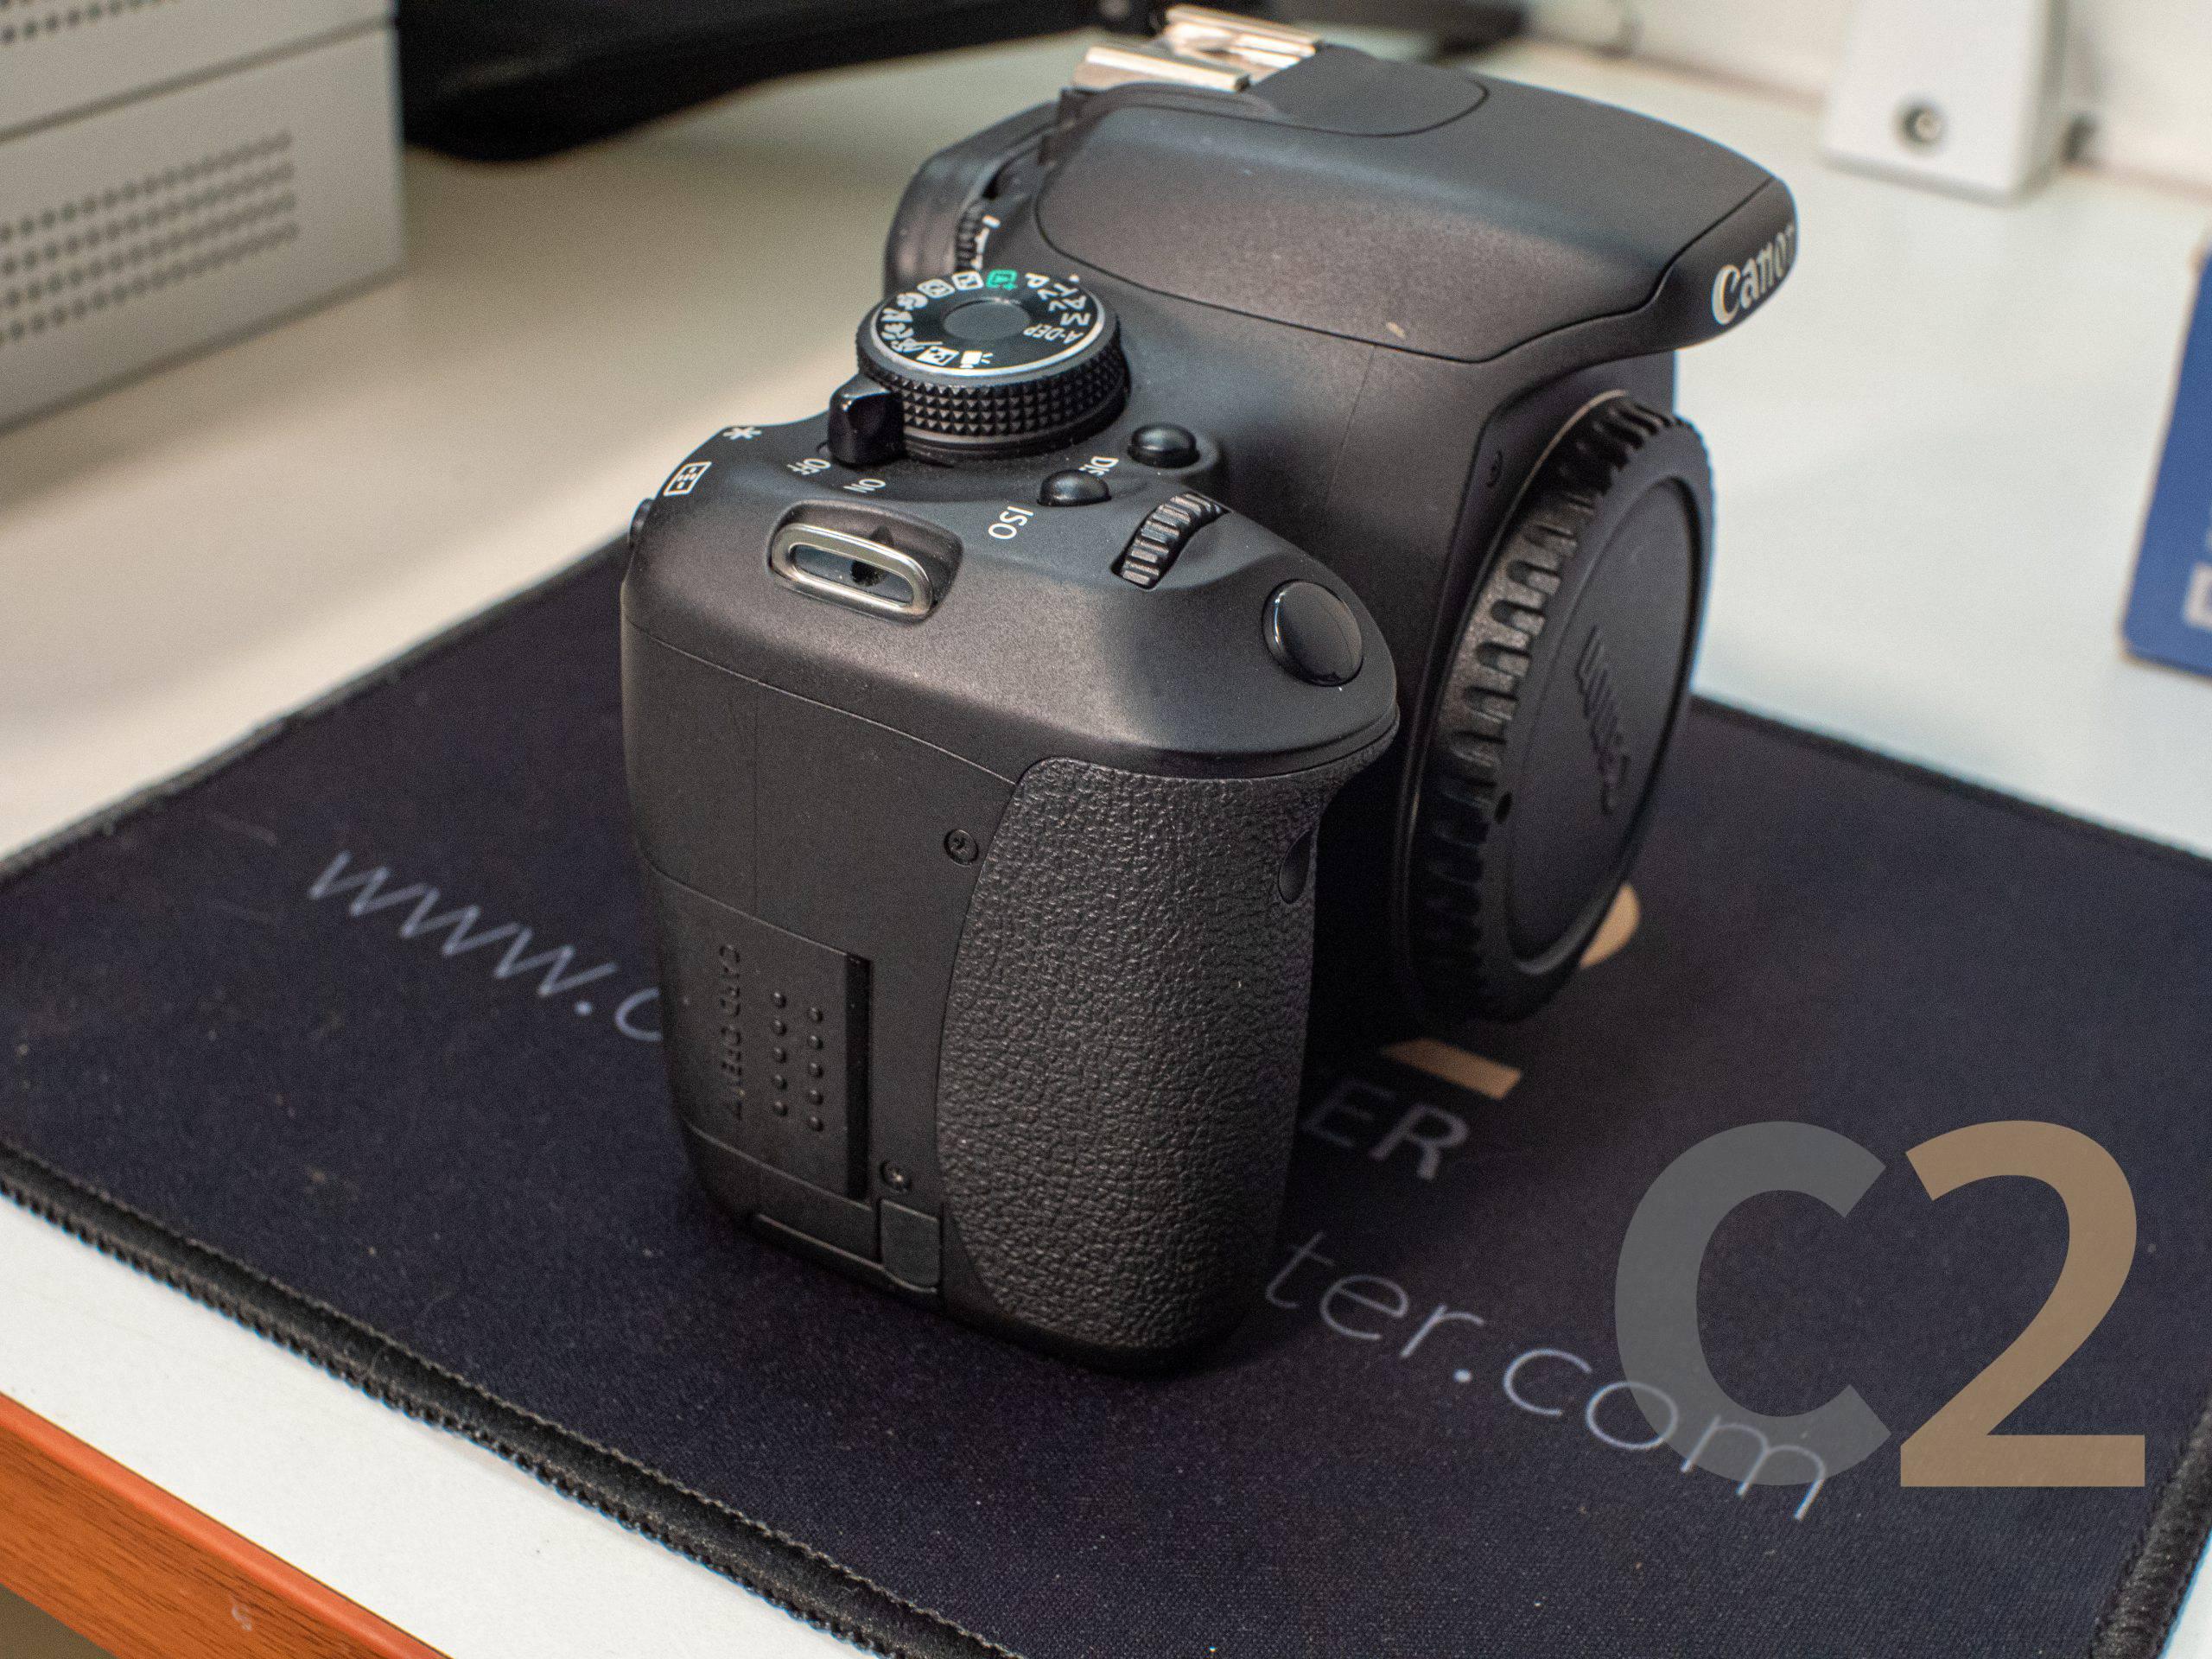 【特價一台二手】 CANON EOS 600D BODY ONLY 單反相機, 旅行 Camera 99% NEW - C2 Computer